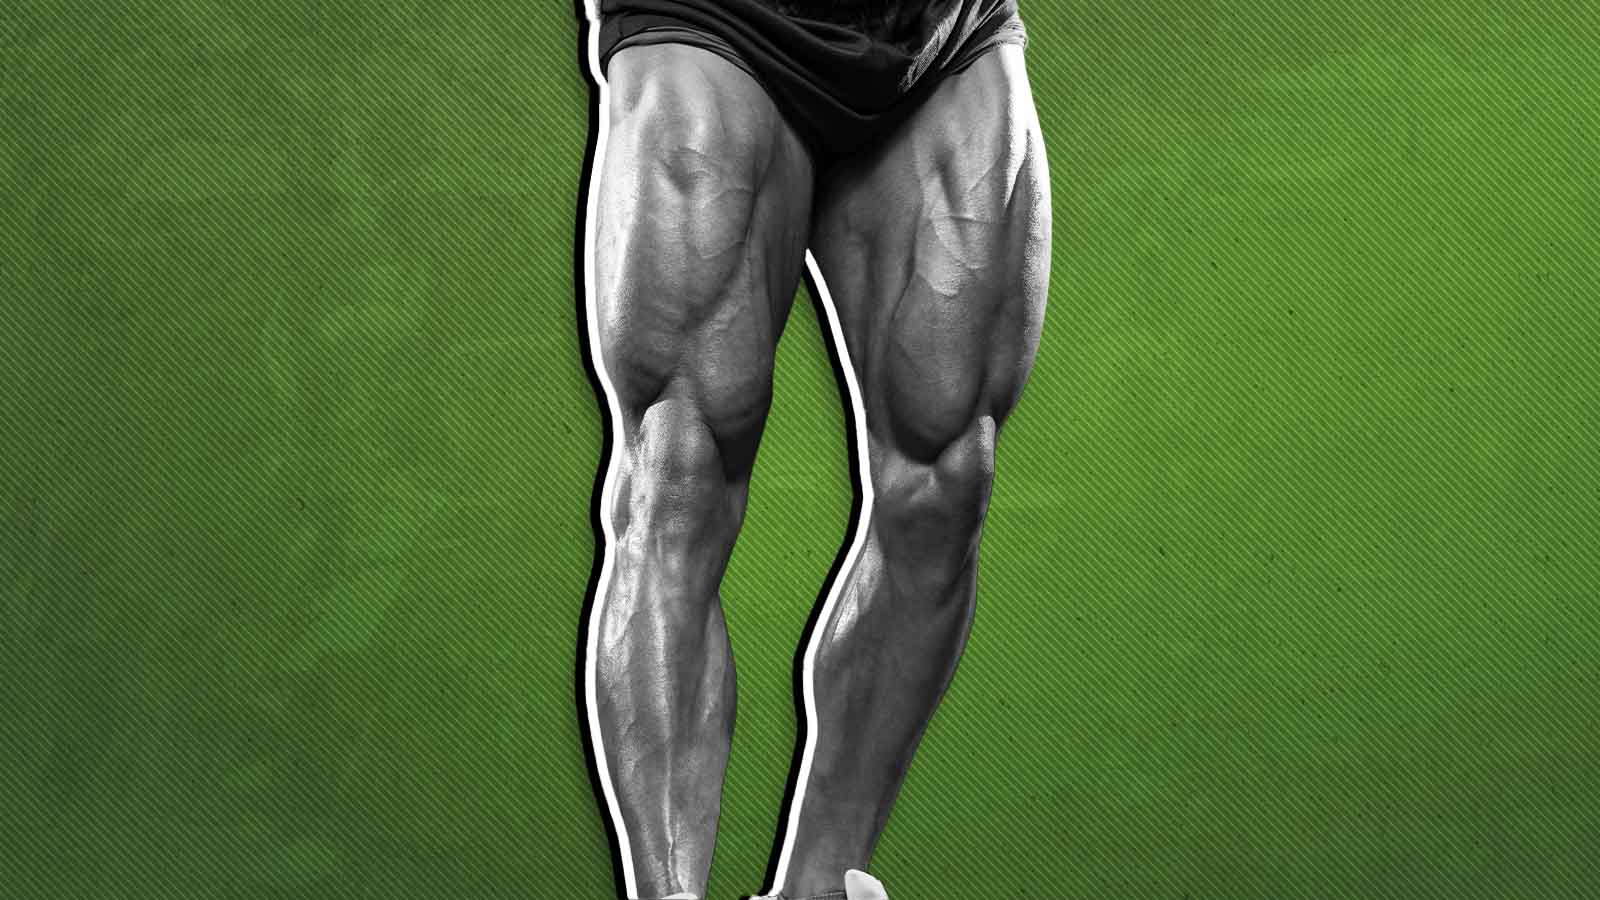 Muscle #Anatomy #Bones #Fitness #Training #Health #Physiology #Legs